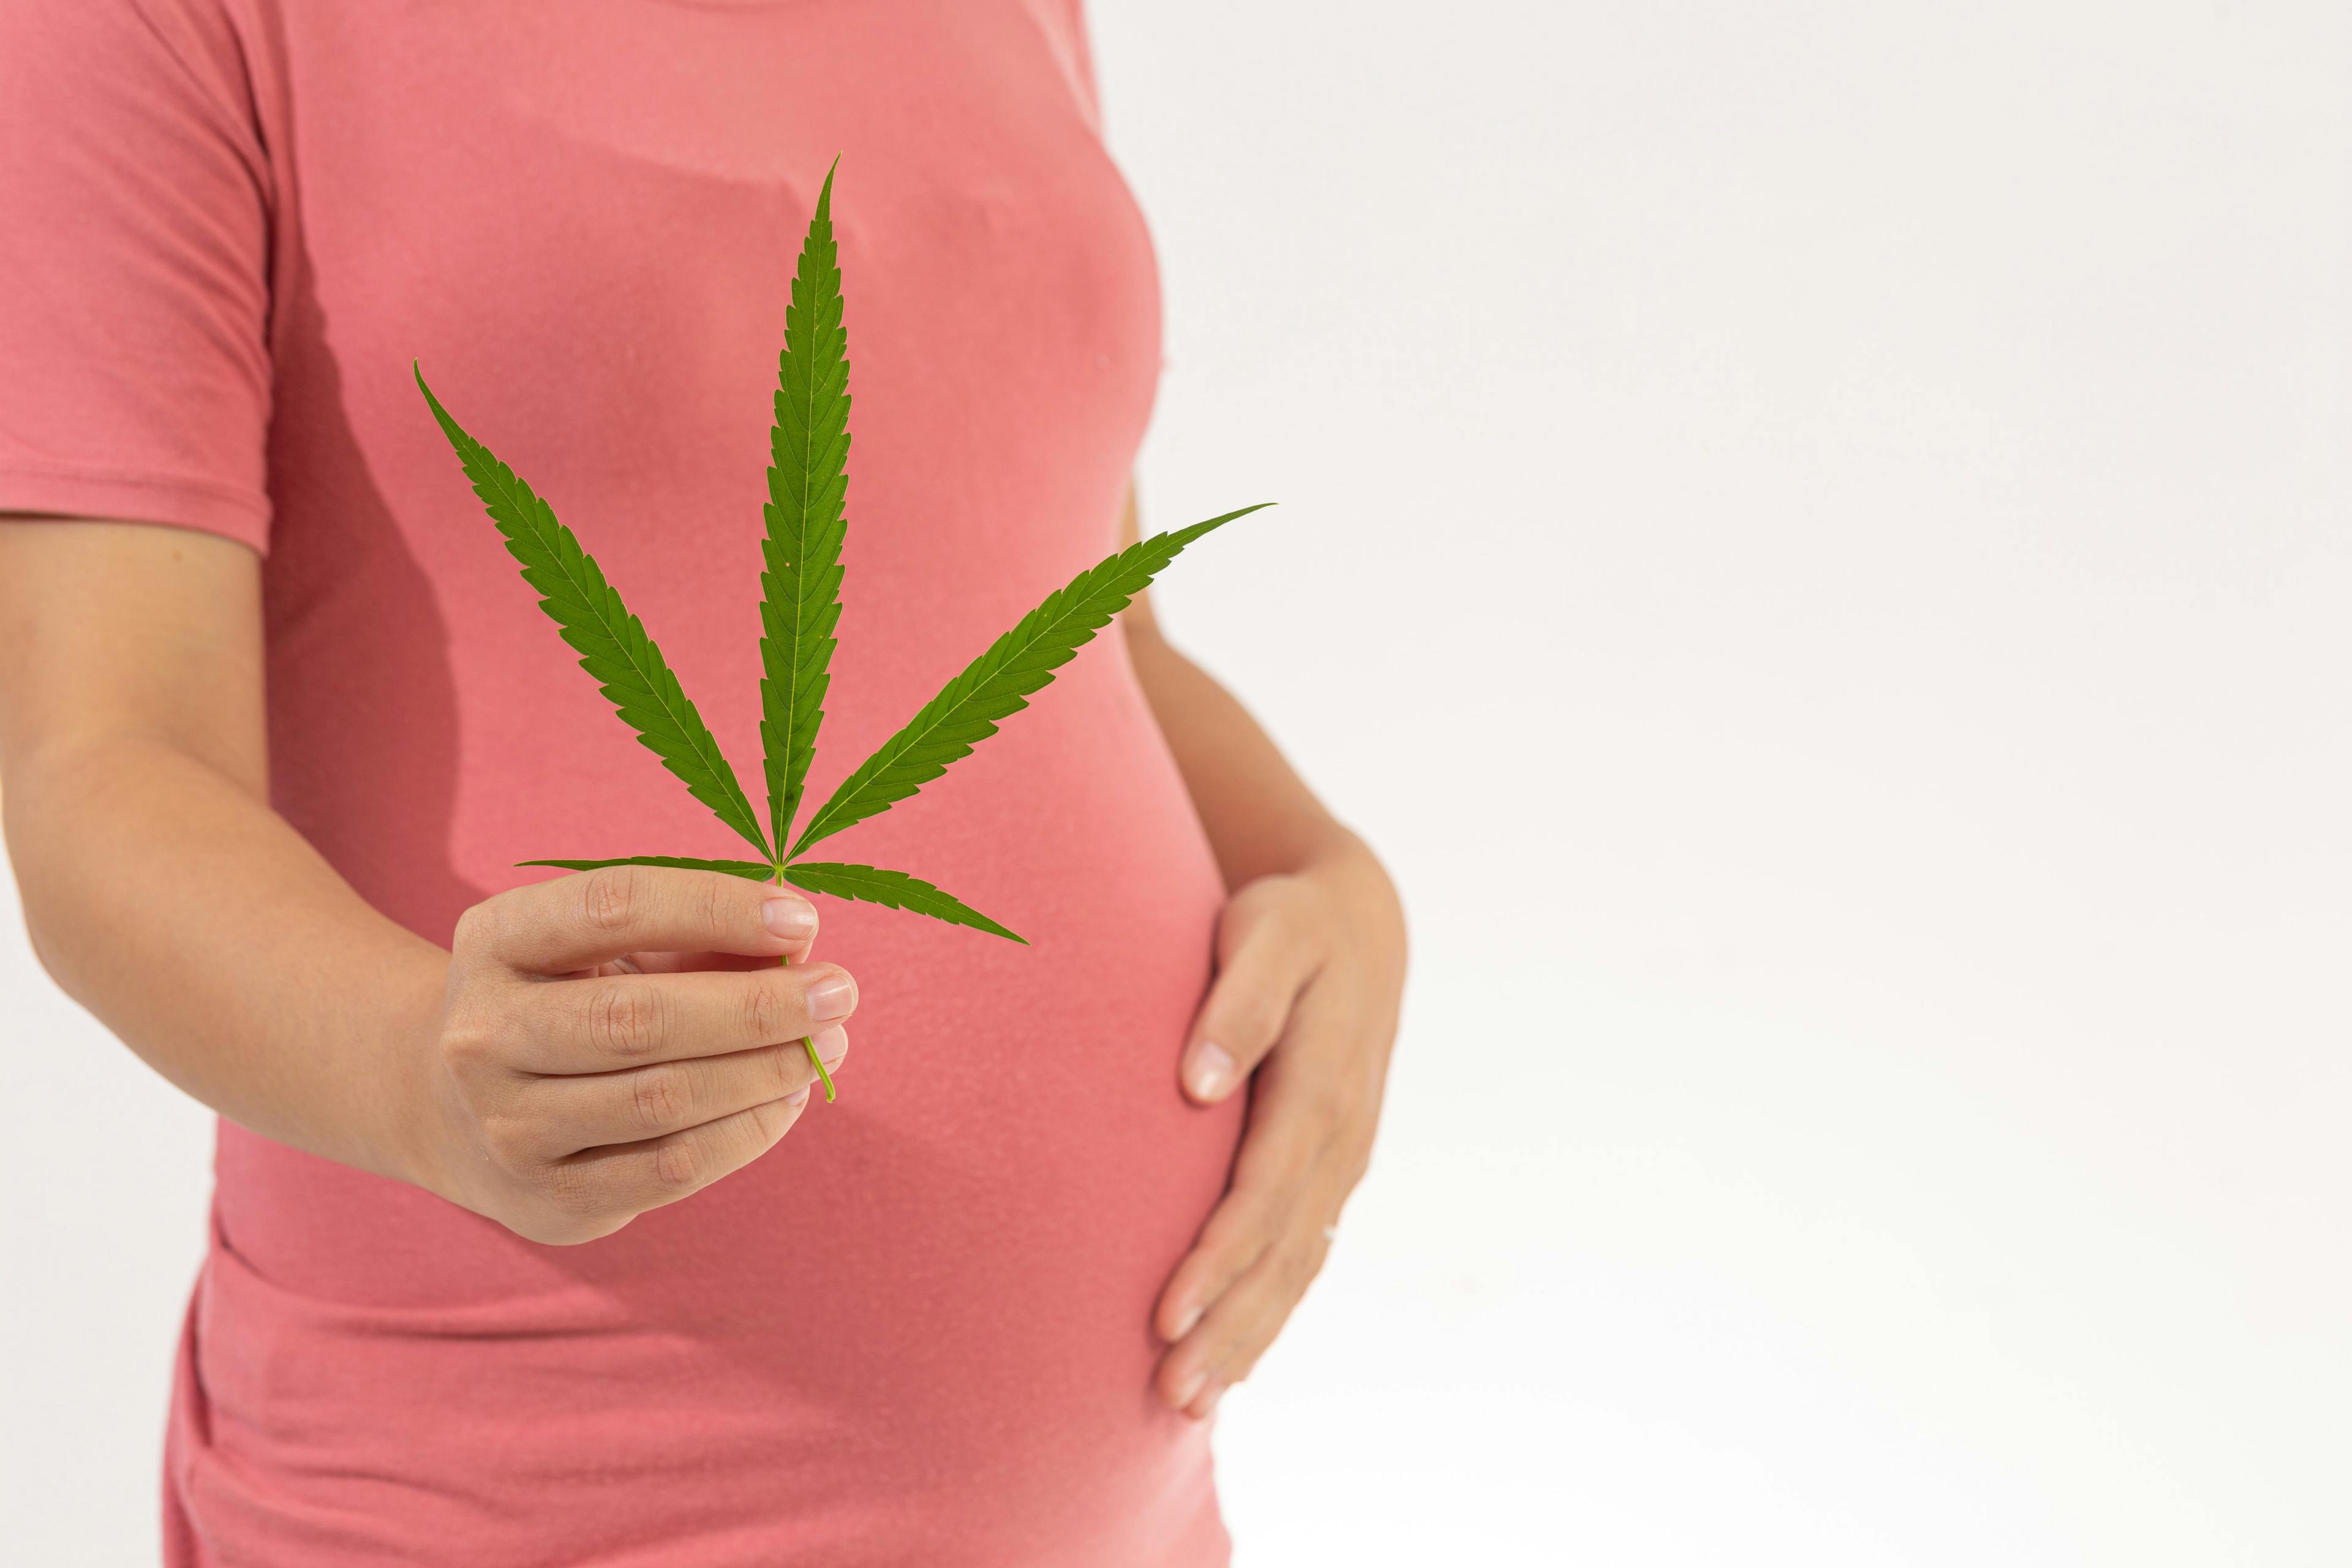 Cannabis Legalization's Impact on Prenatal Marijuana Use